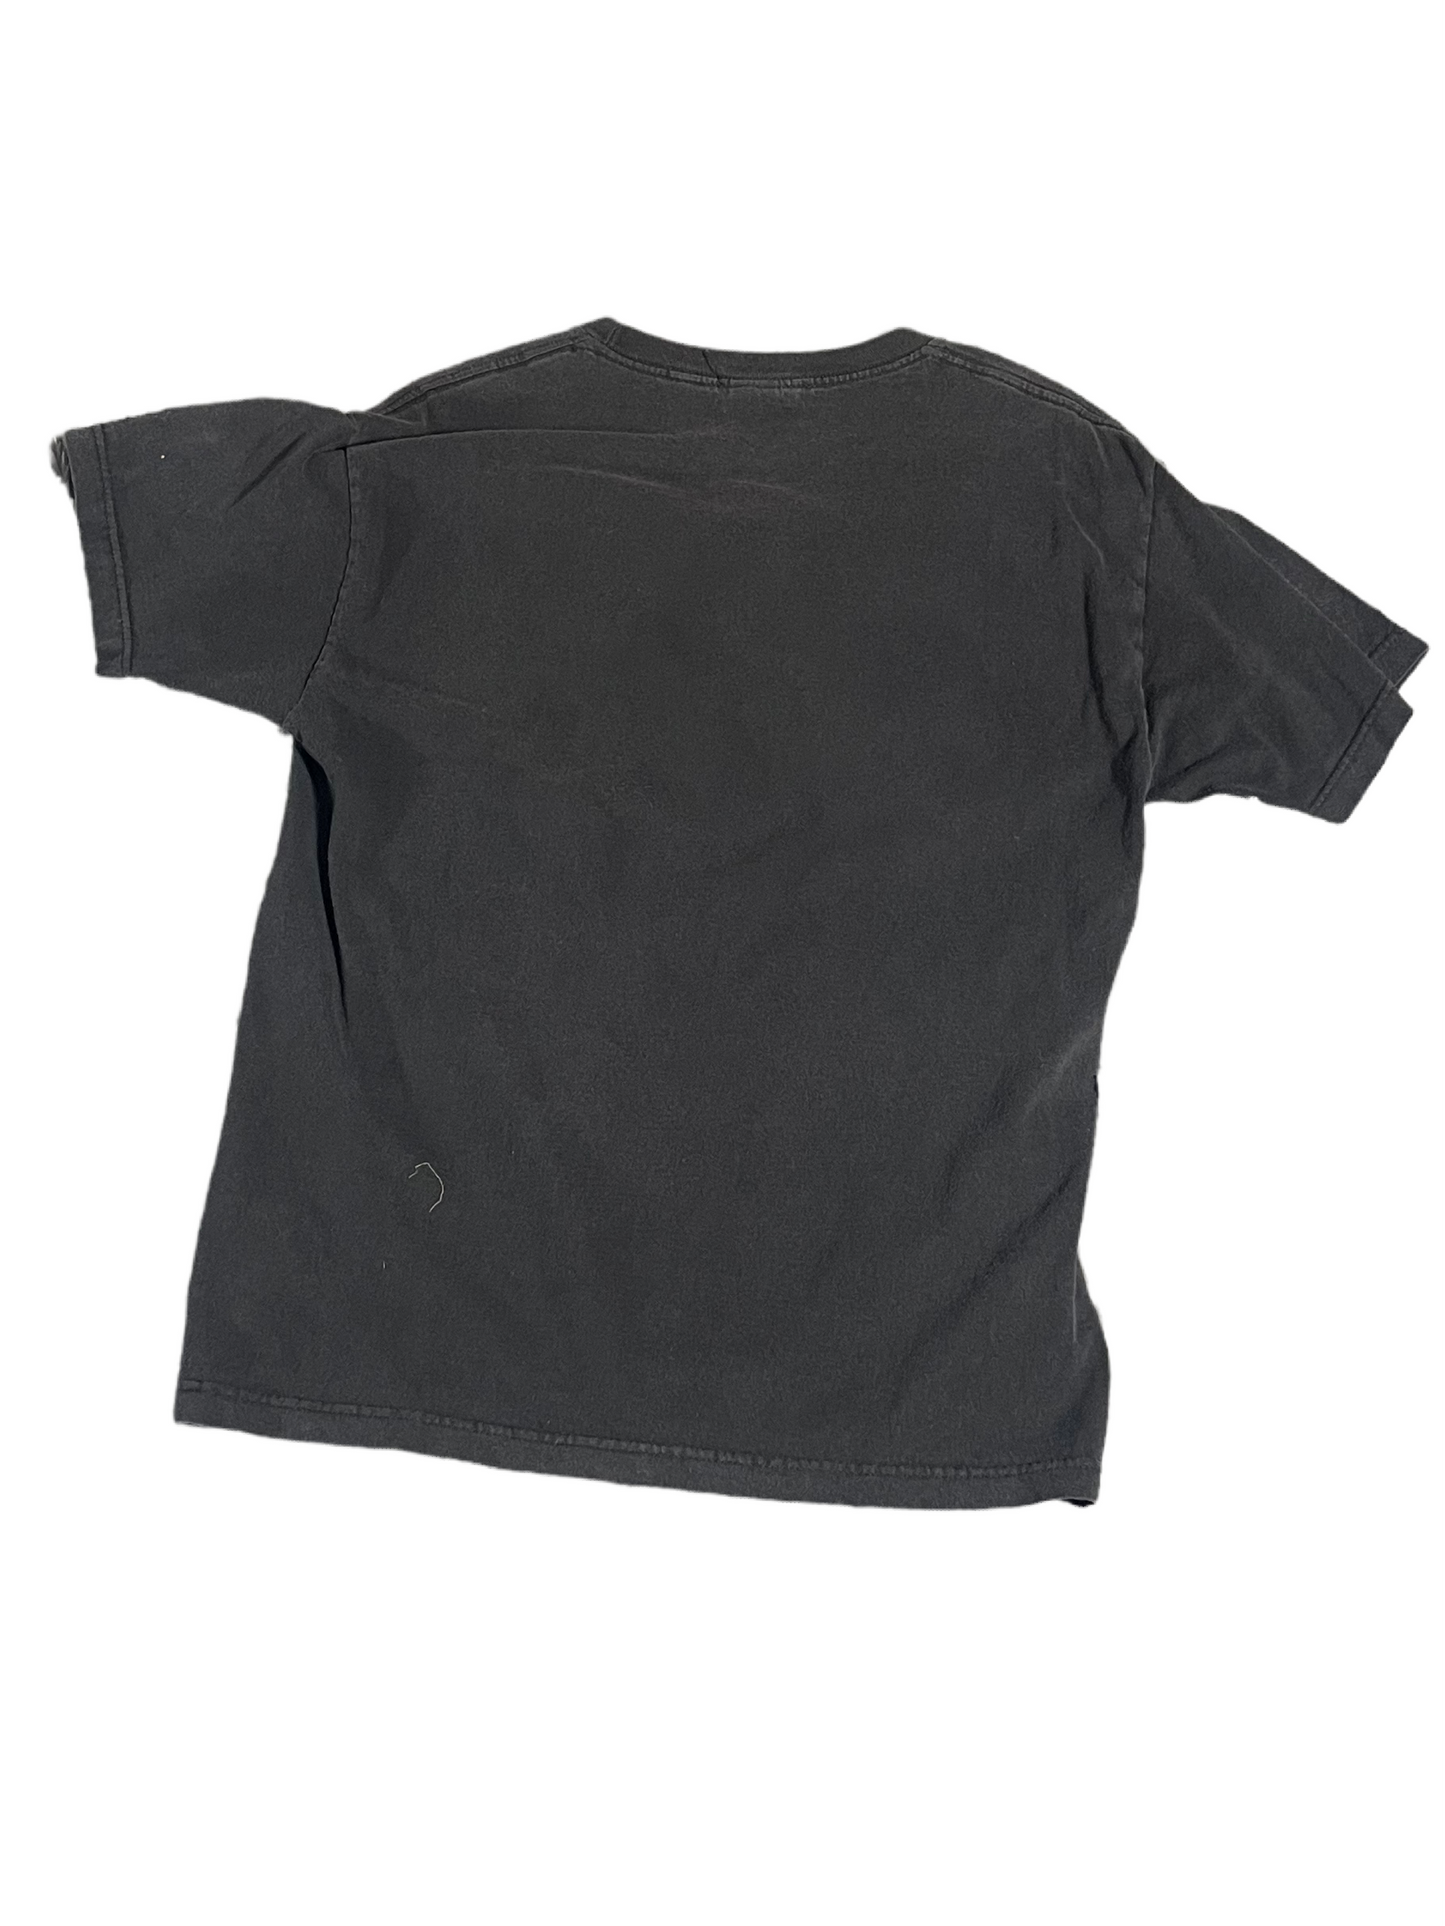 Metal Mulisha Shirt Black Large Mens